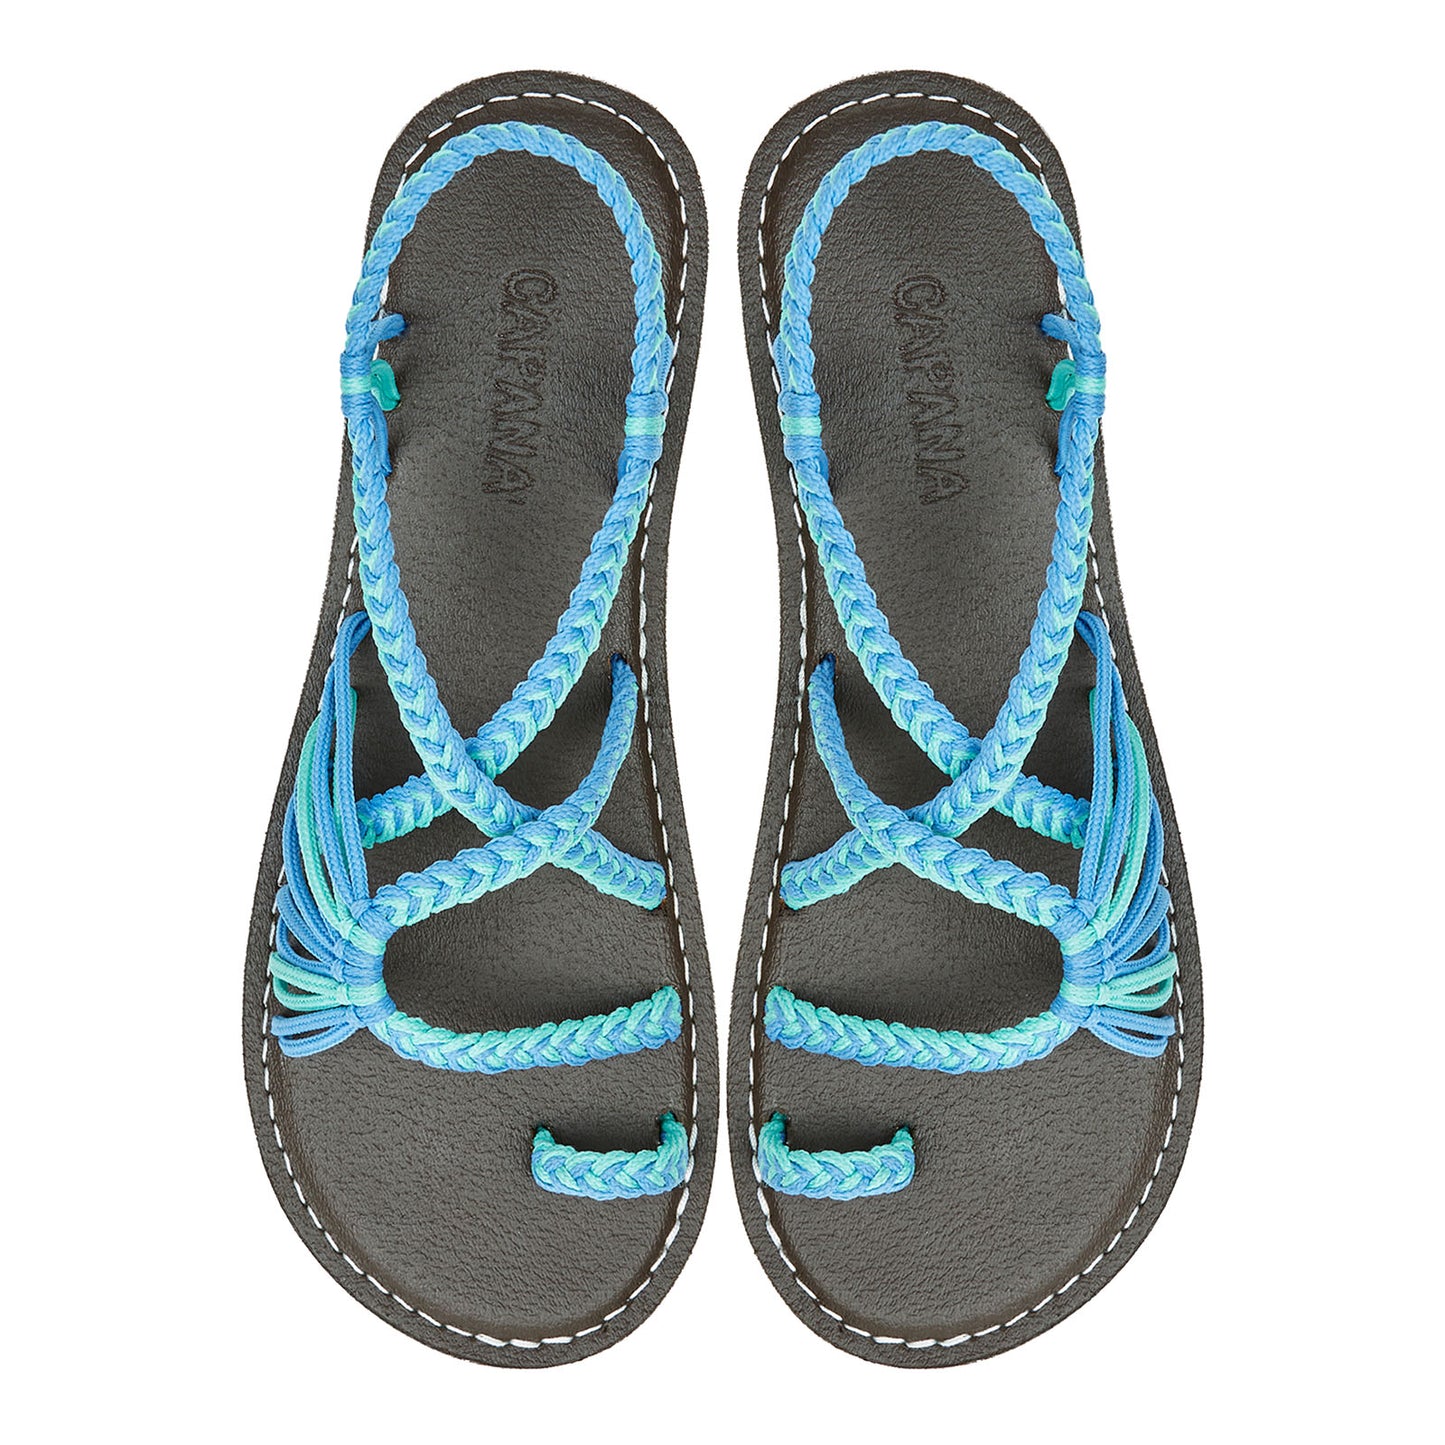 Commune Turquoise Sky blue Rope Sandals Mint Blue loop design Flat sandals for women